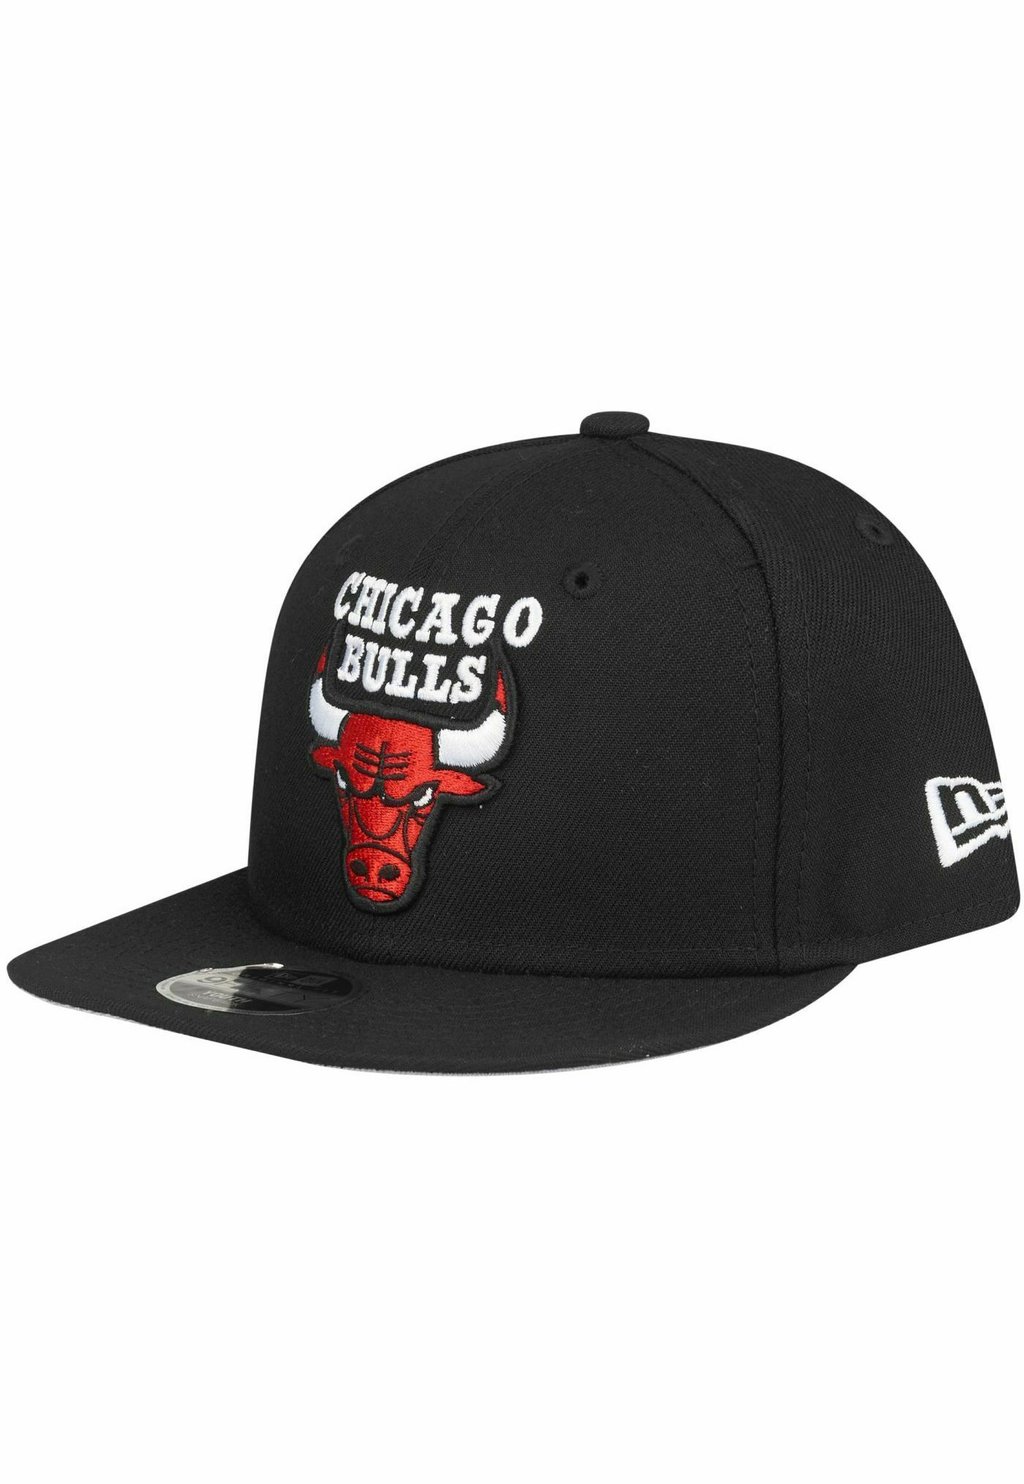 Бейсболка 9FIFTY CHICAGO BULLS New Era, цвет black бейсболка new era 60137572 chicago bulls размер 58